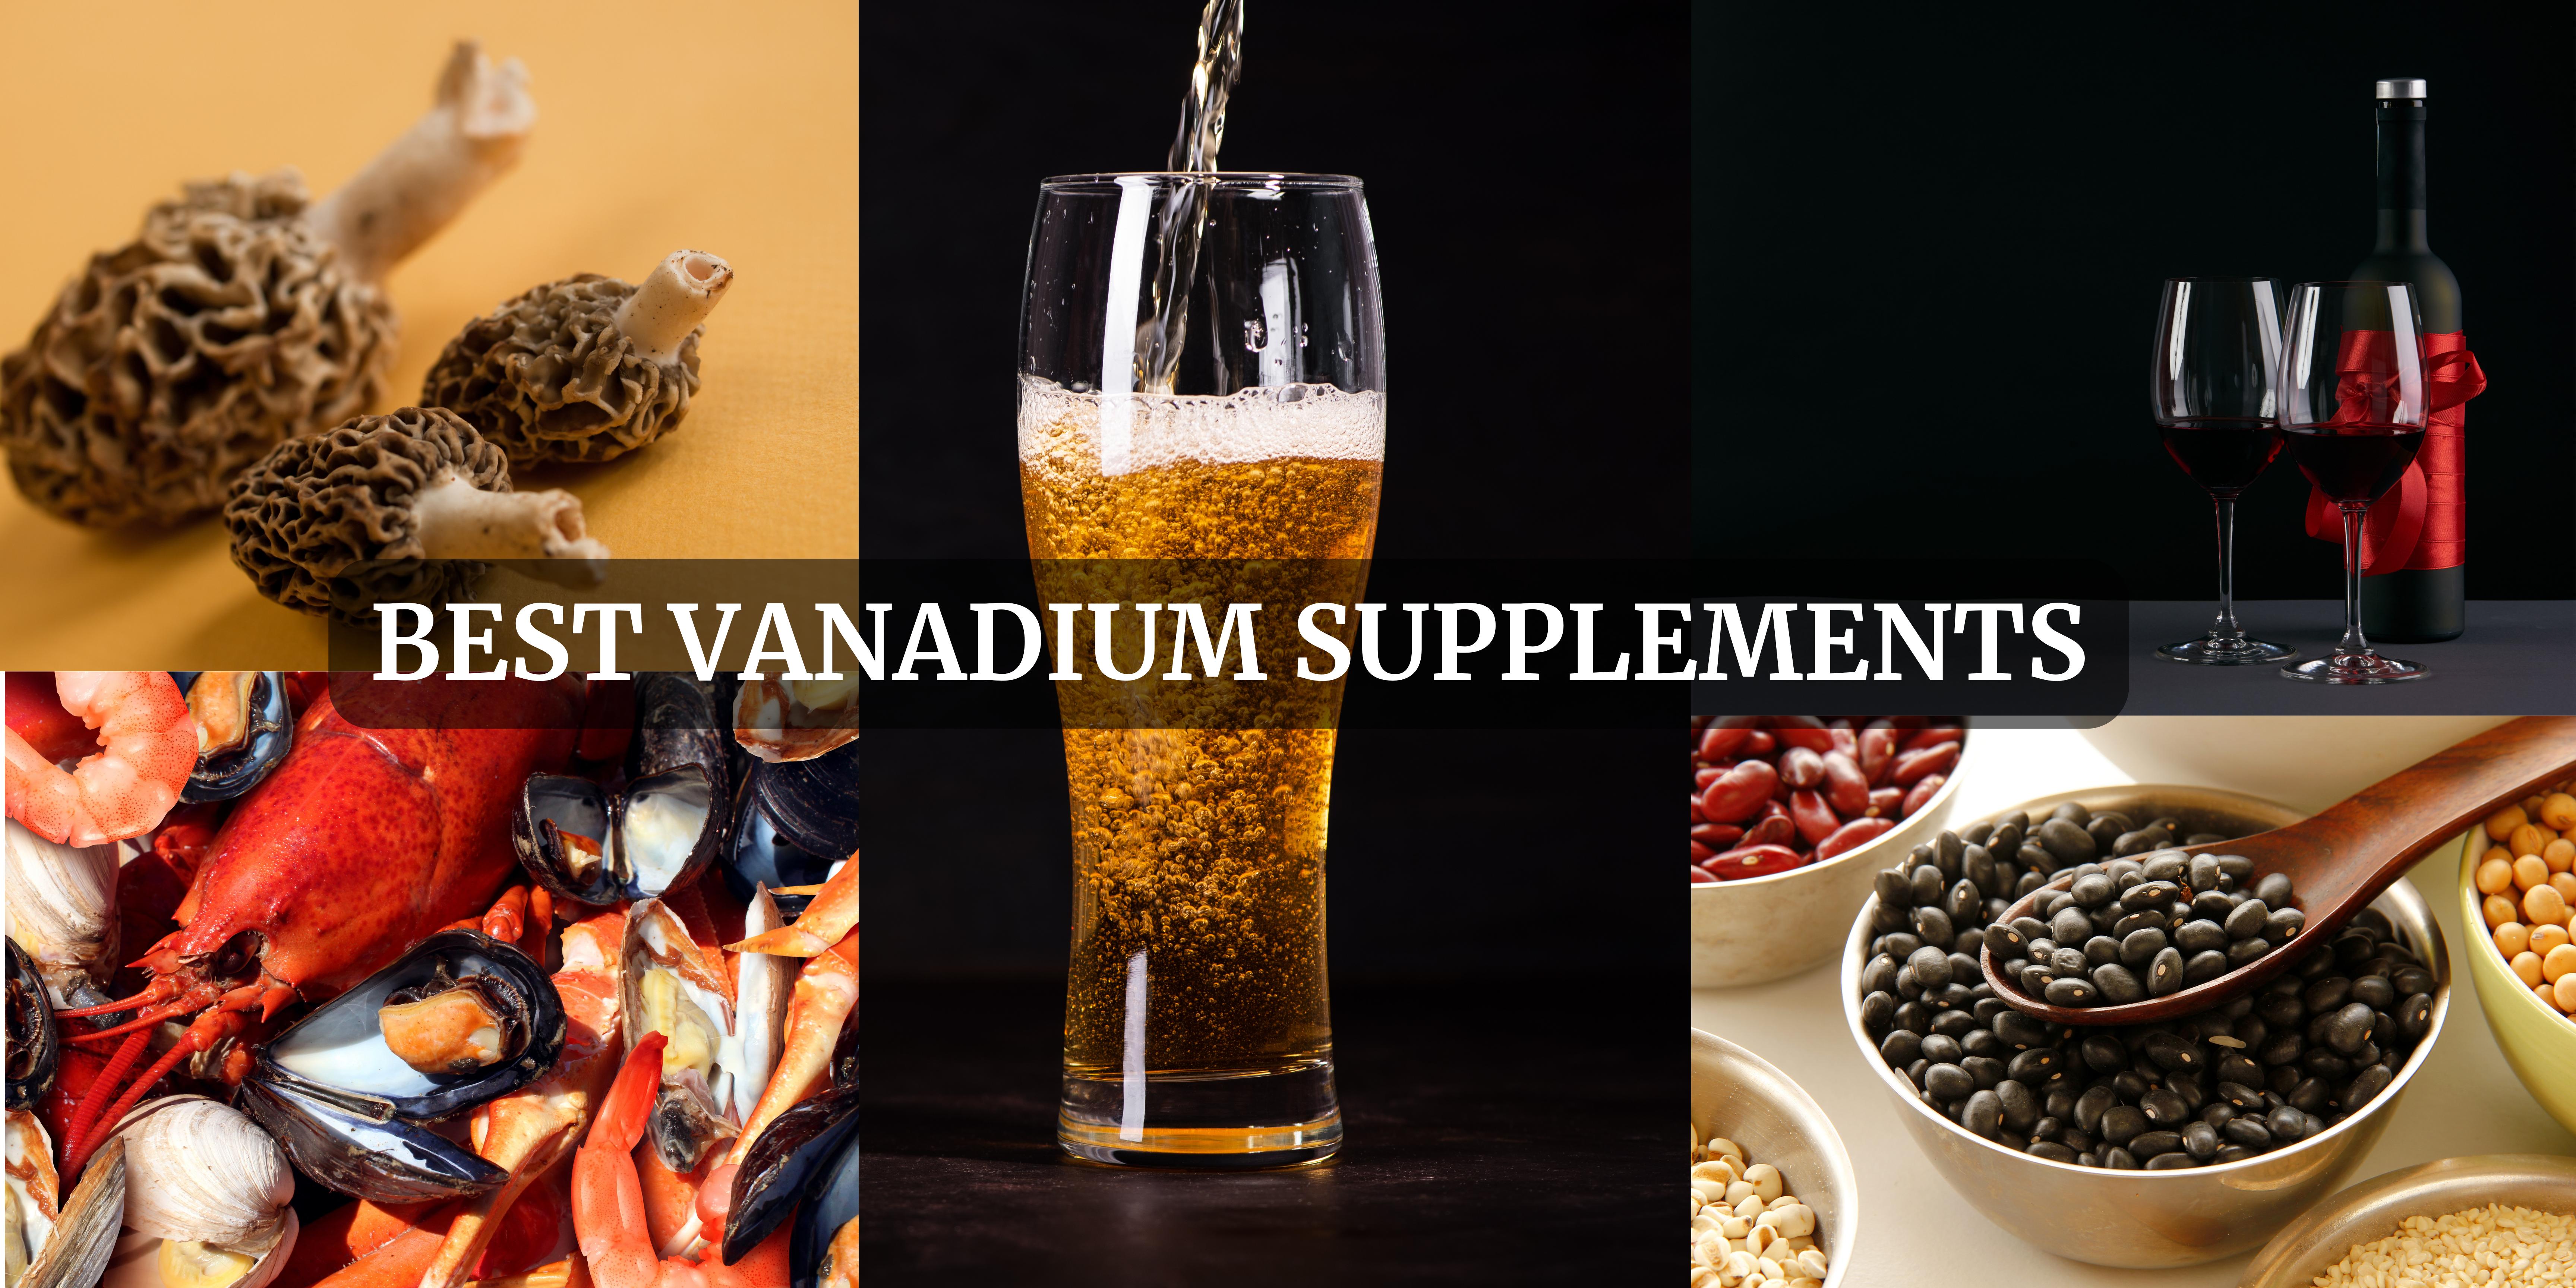 Vanadium Supplements in Italy